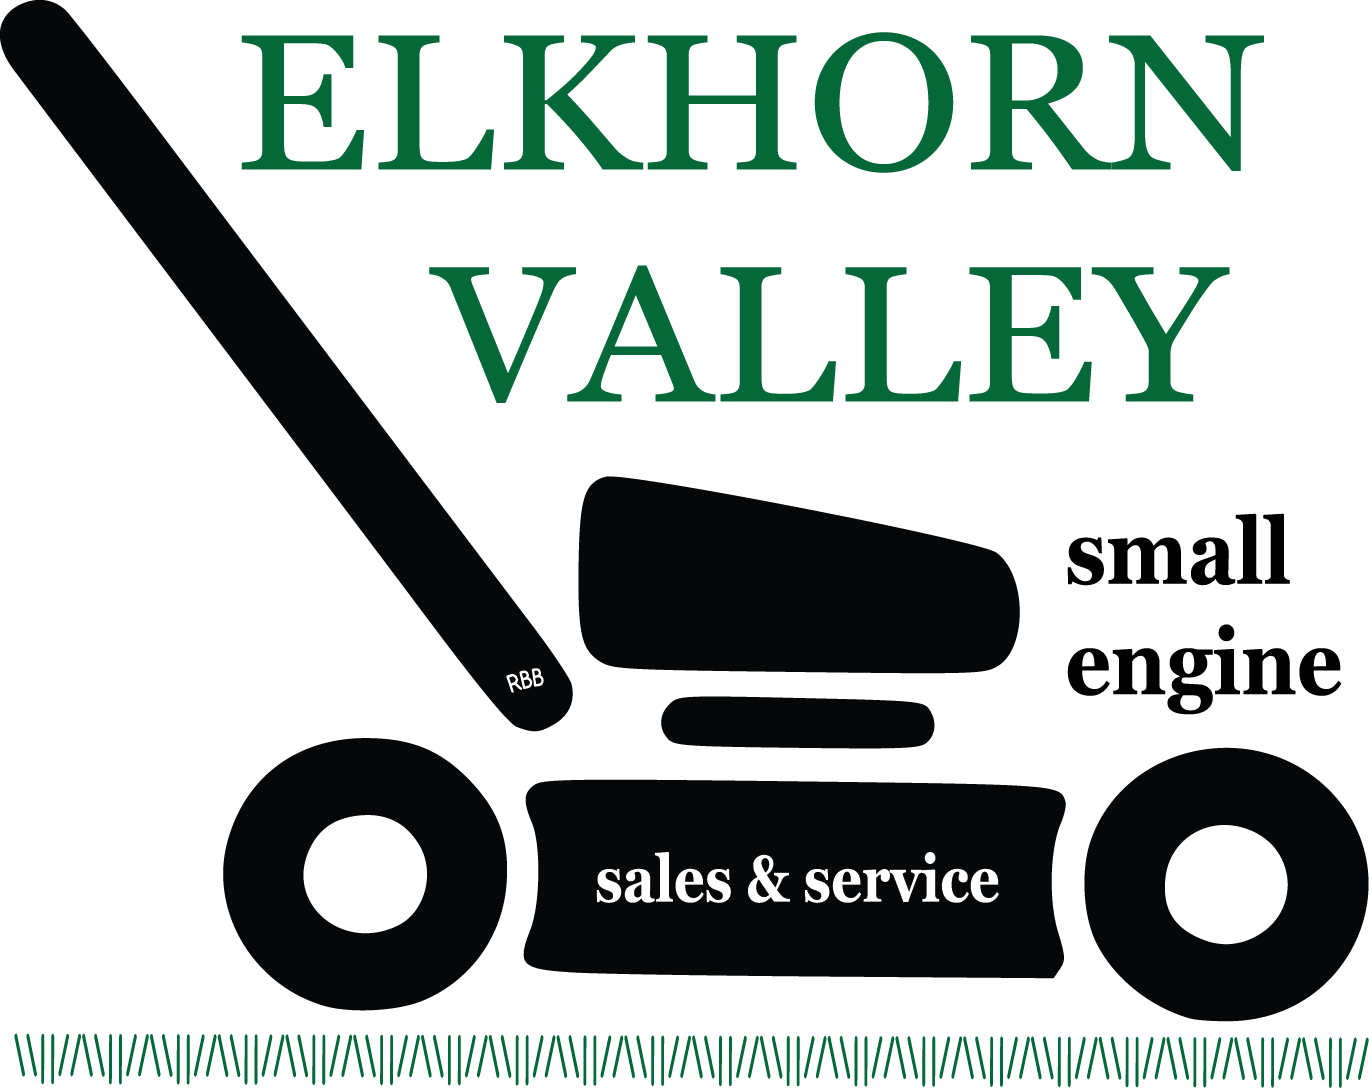 Elkhorn Valley Small Engine Sales & Service Logo